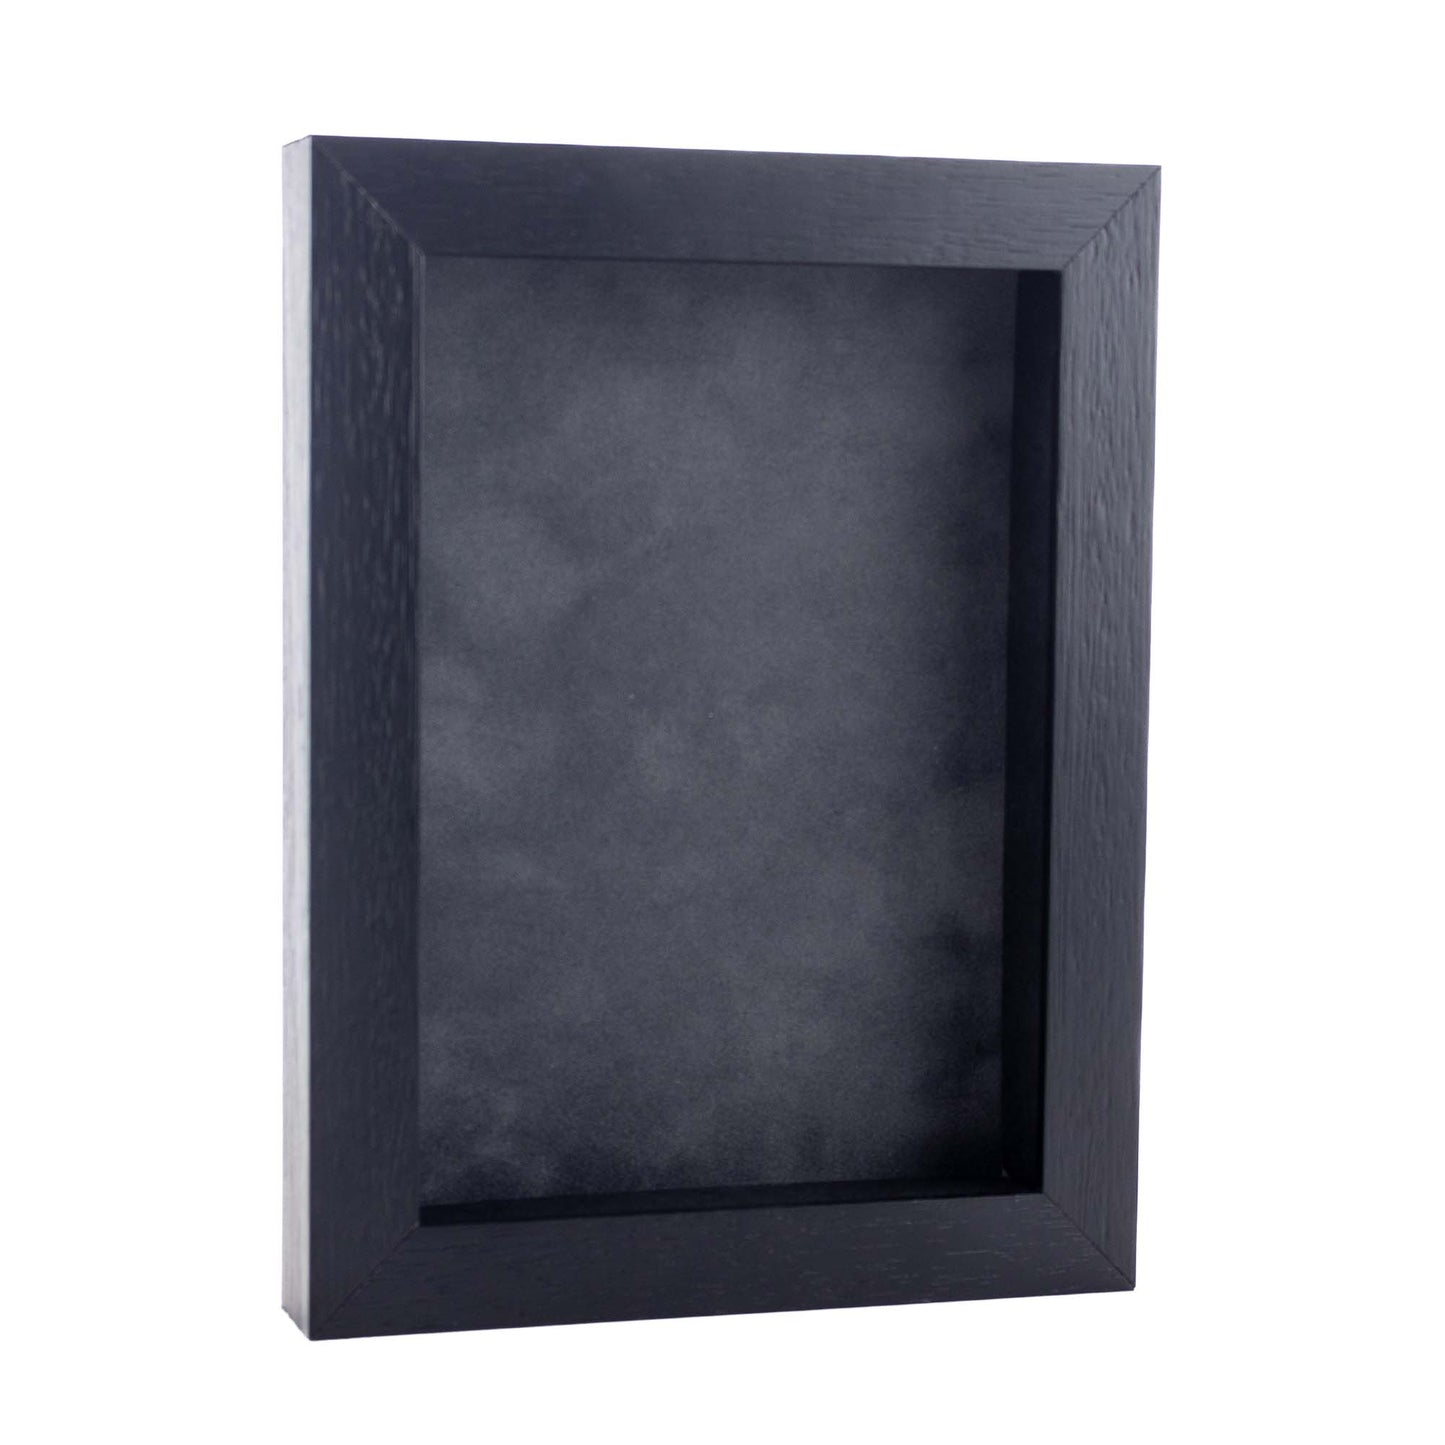 Textured Black Shadow Box Frame With Dark Grey Acid-Free Suede Backing